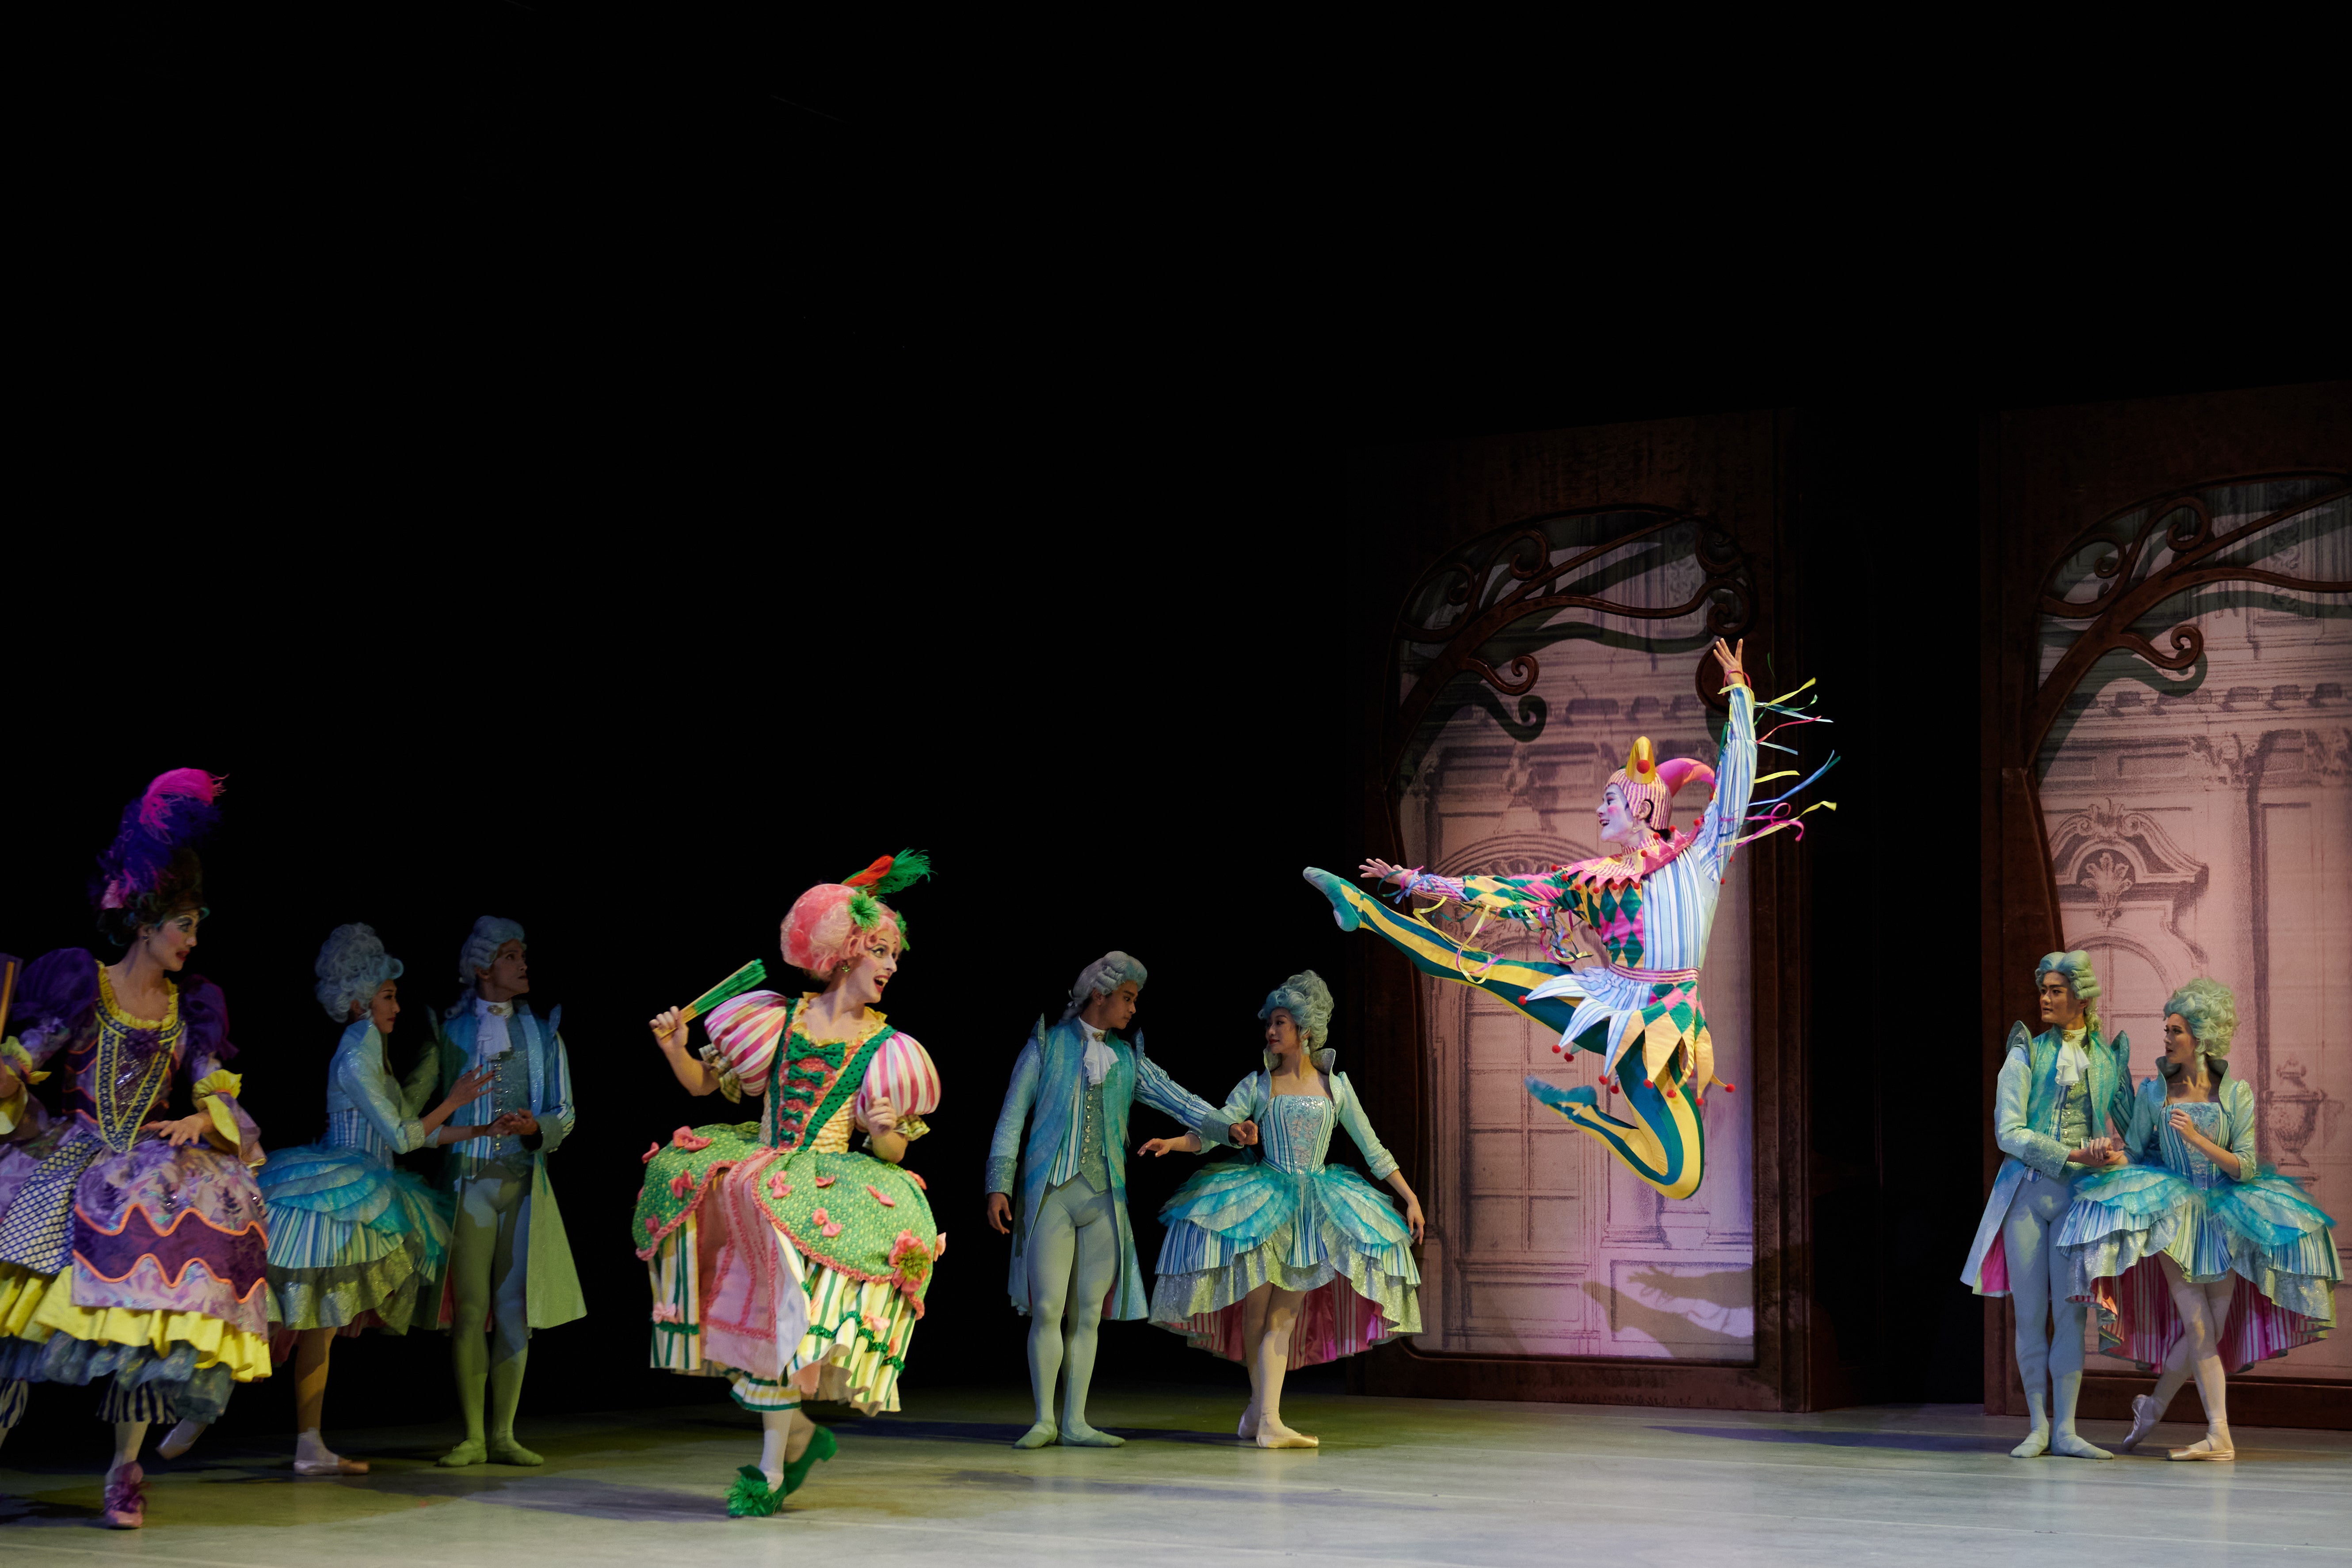 Cinderella_Hong Kong Ballet Dancers_Photography_Conrad Dy-Liacco (3).jpg